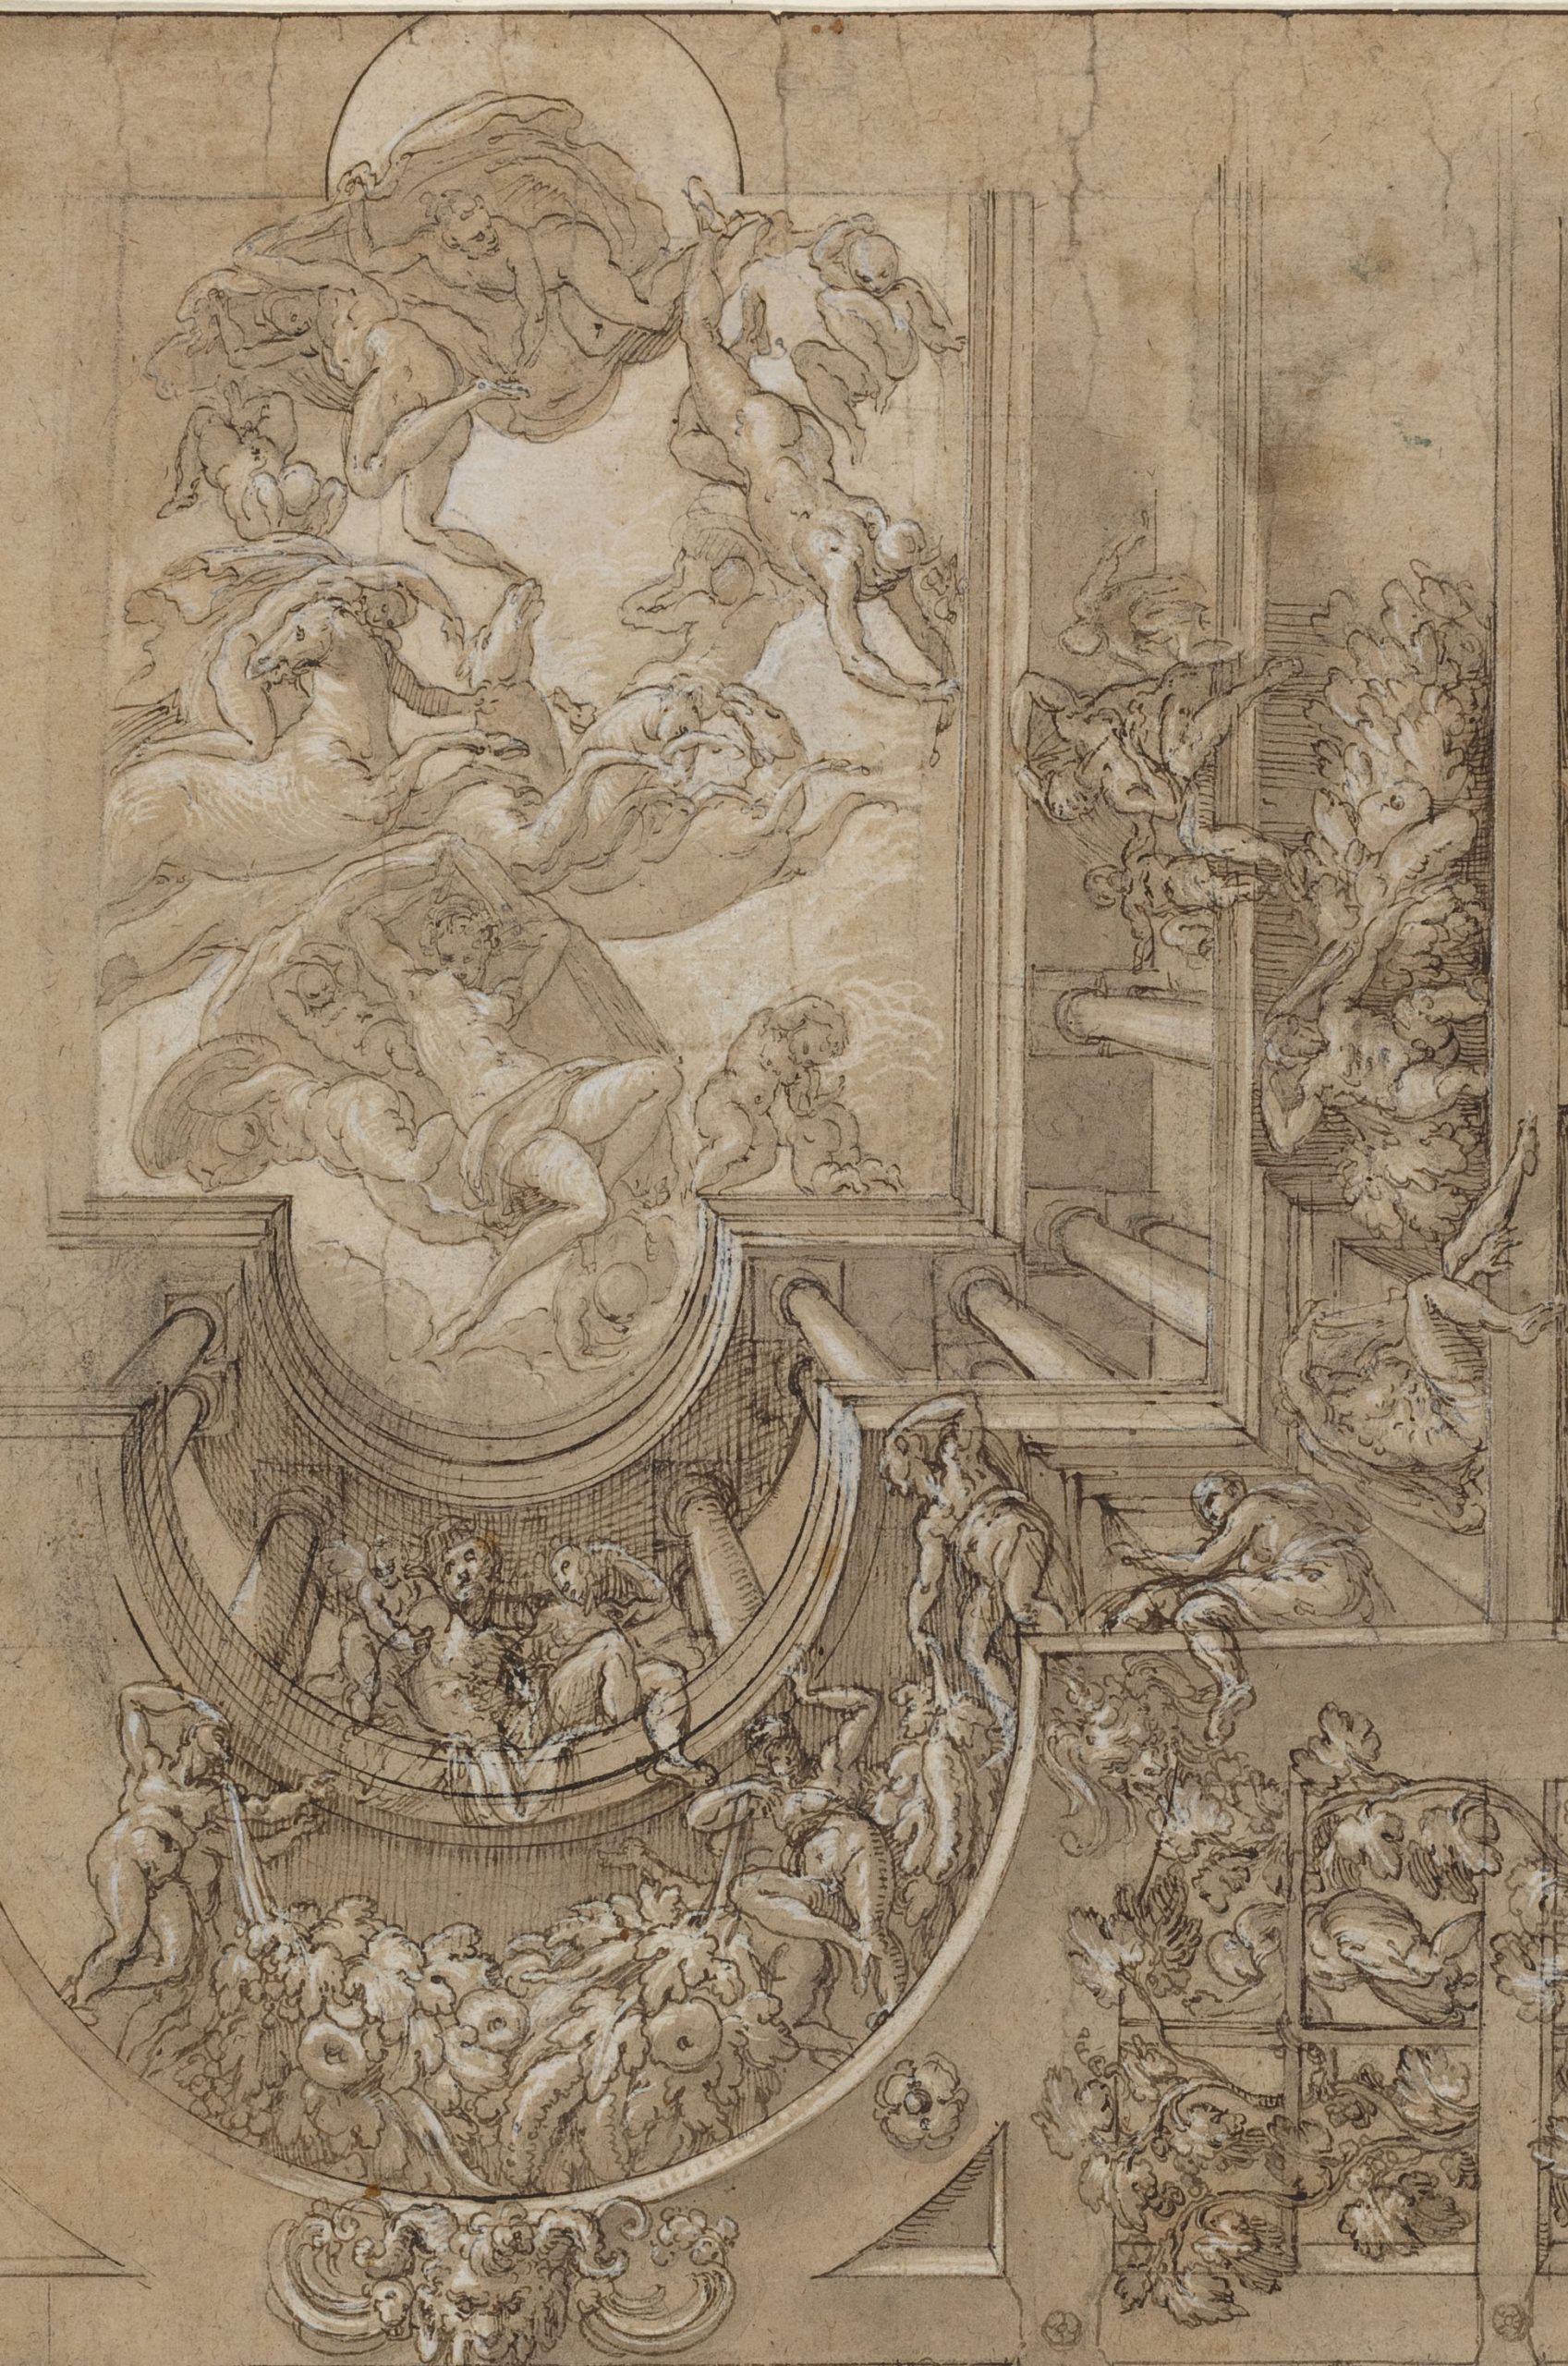 16th Century italian_Fantastic Design for an Illusionistic Ceiling with Grape Arbor_DETAIL-1 5657-009